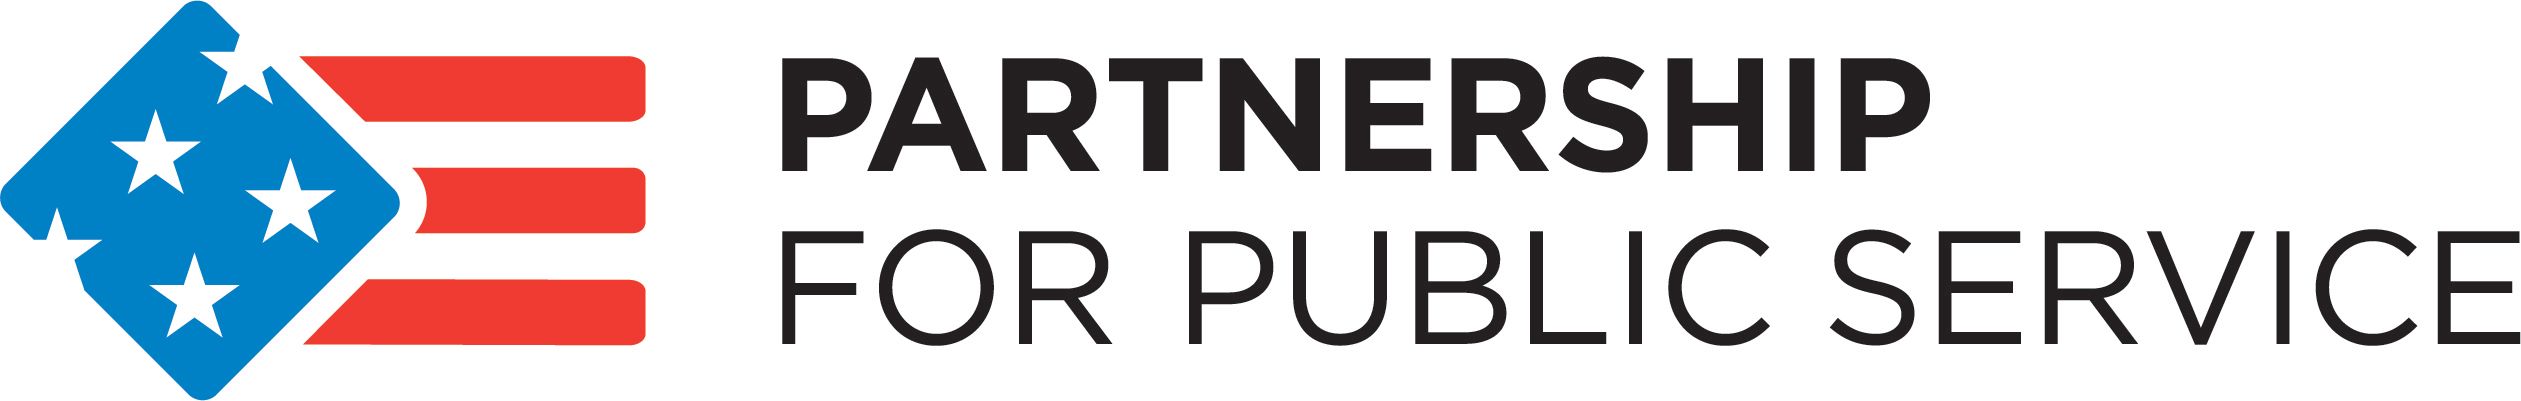 Partnership for Public Service logo 2021